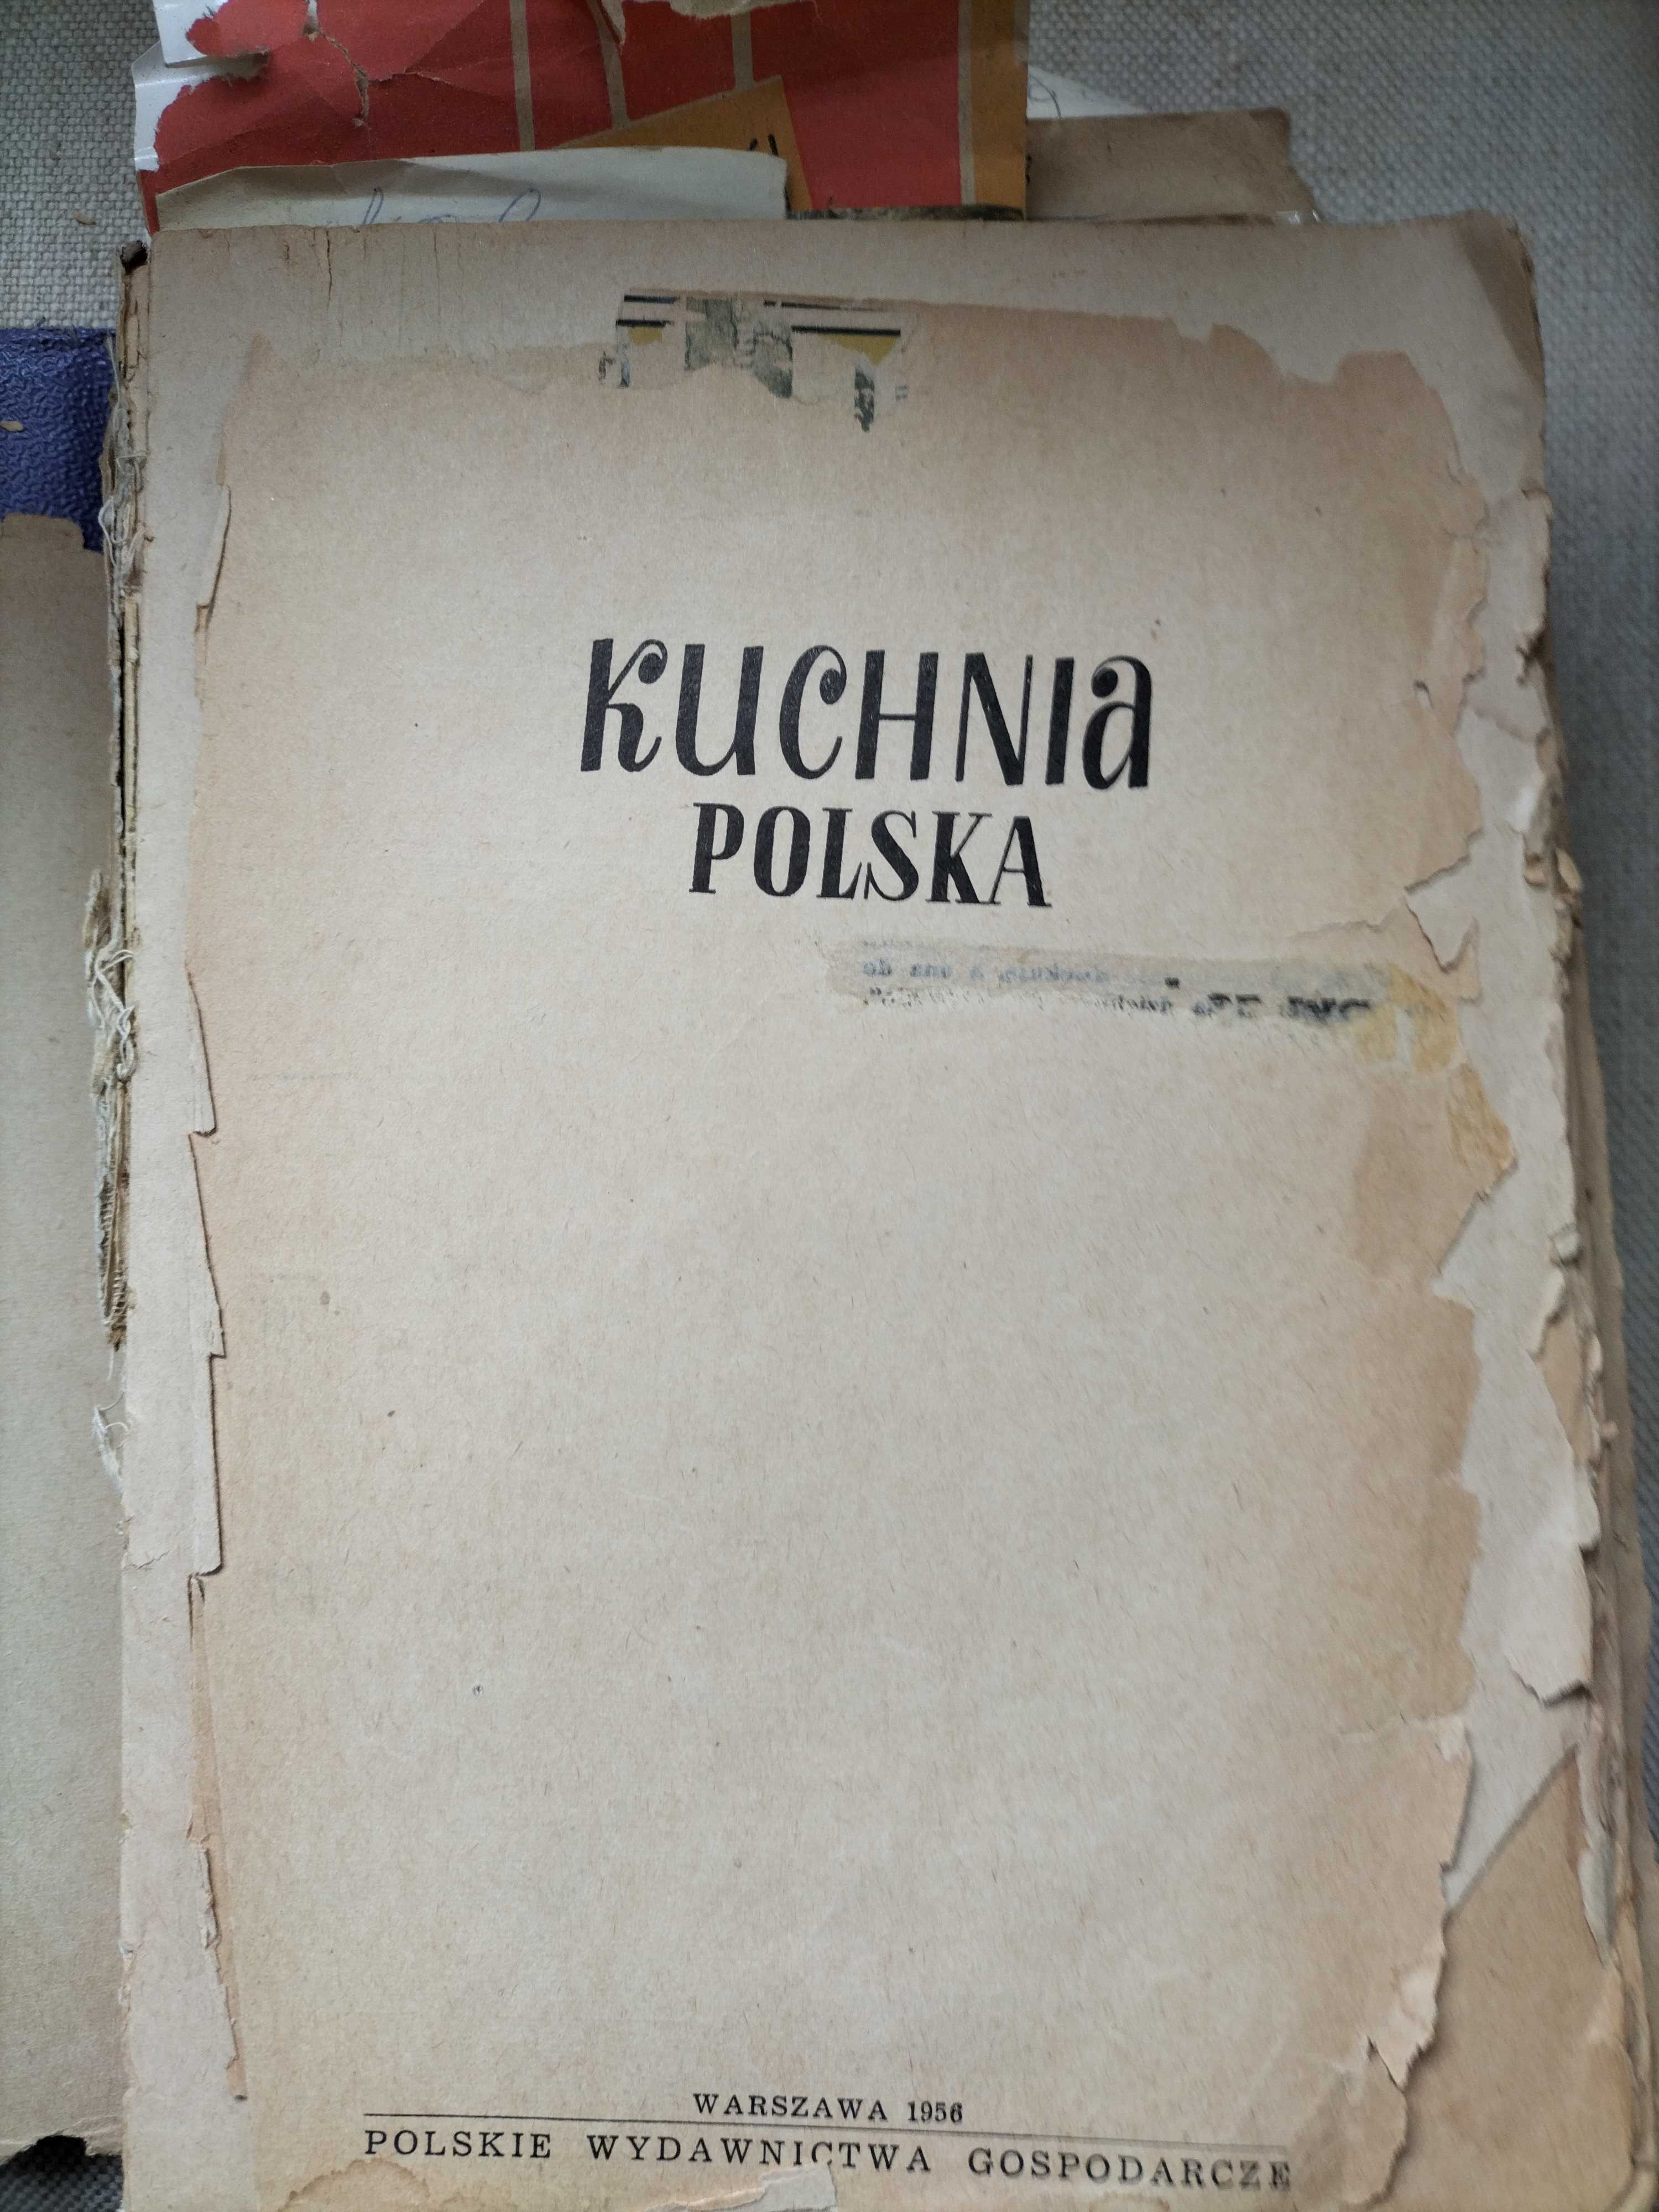 Stara książka kucharska " Kuchnia Polska " z 1956 roku